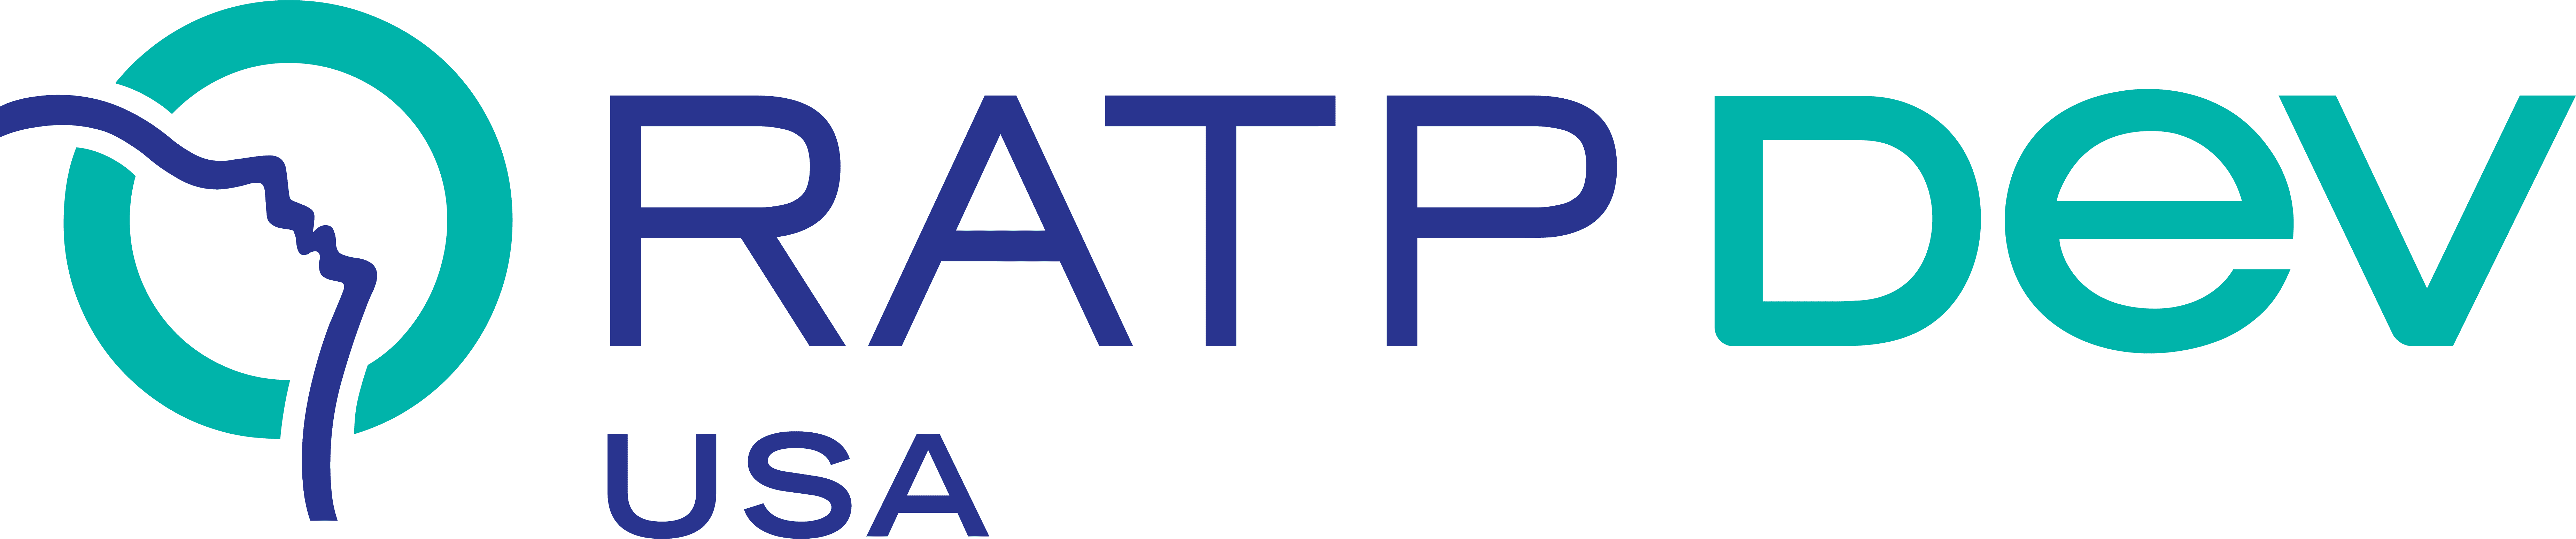 RATP Dev Logo